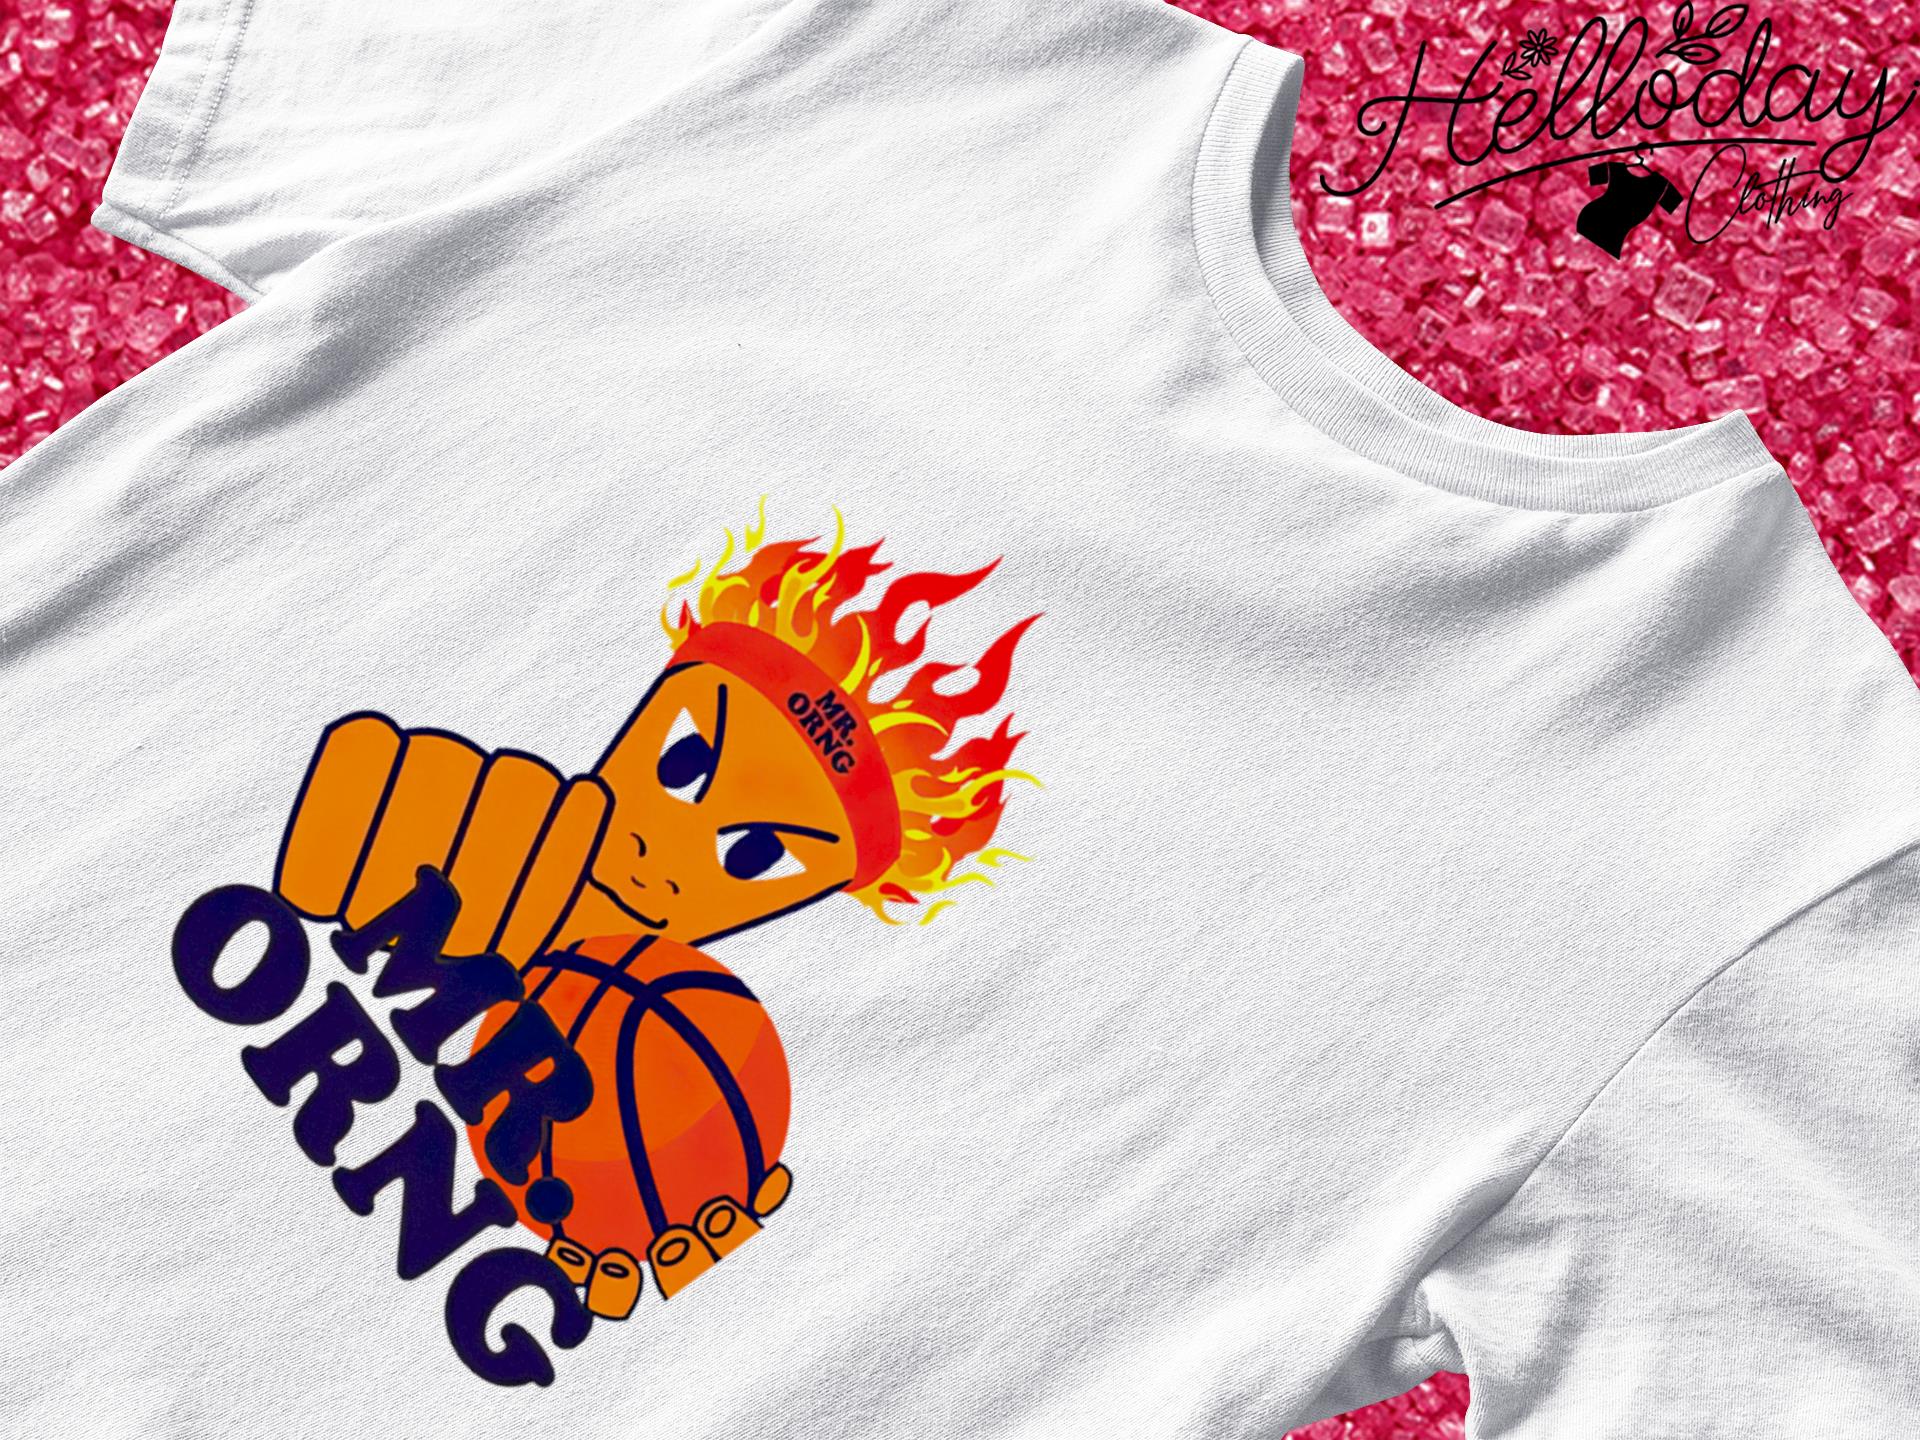 Mr Orng Phoenix Suns Basketball logo shirt